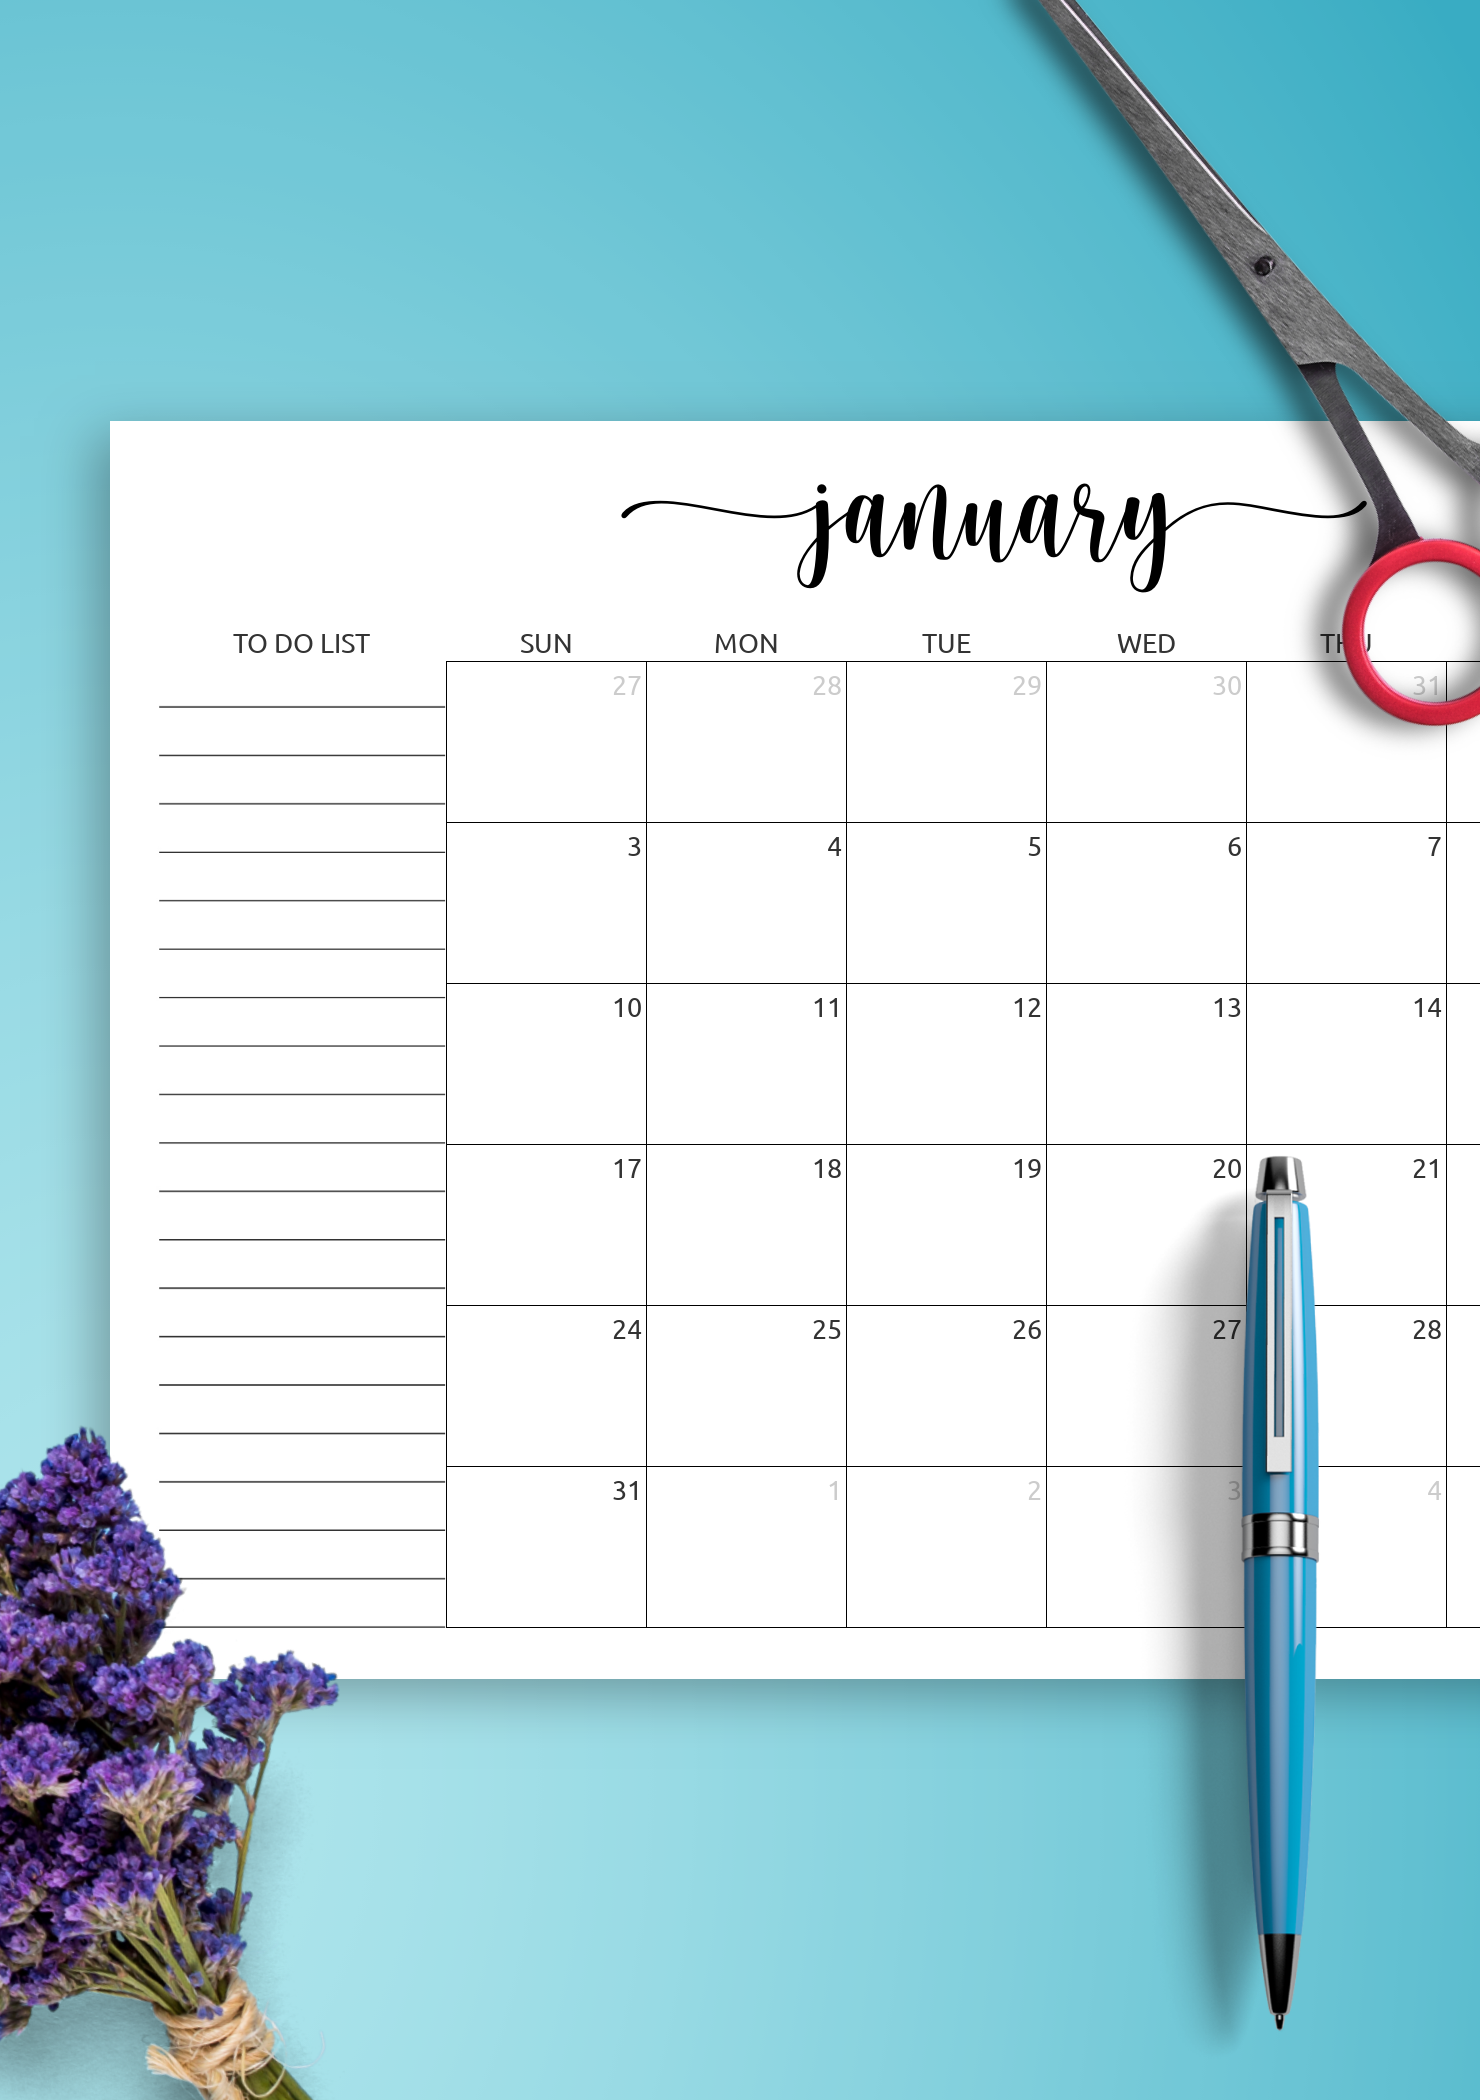 monthly calendar with task list